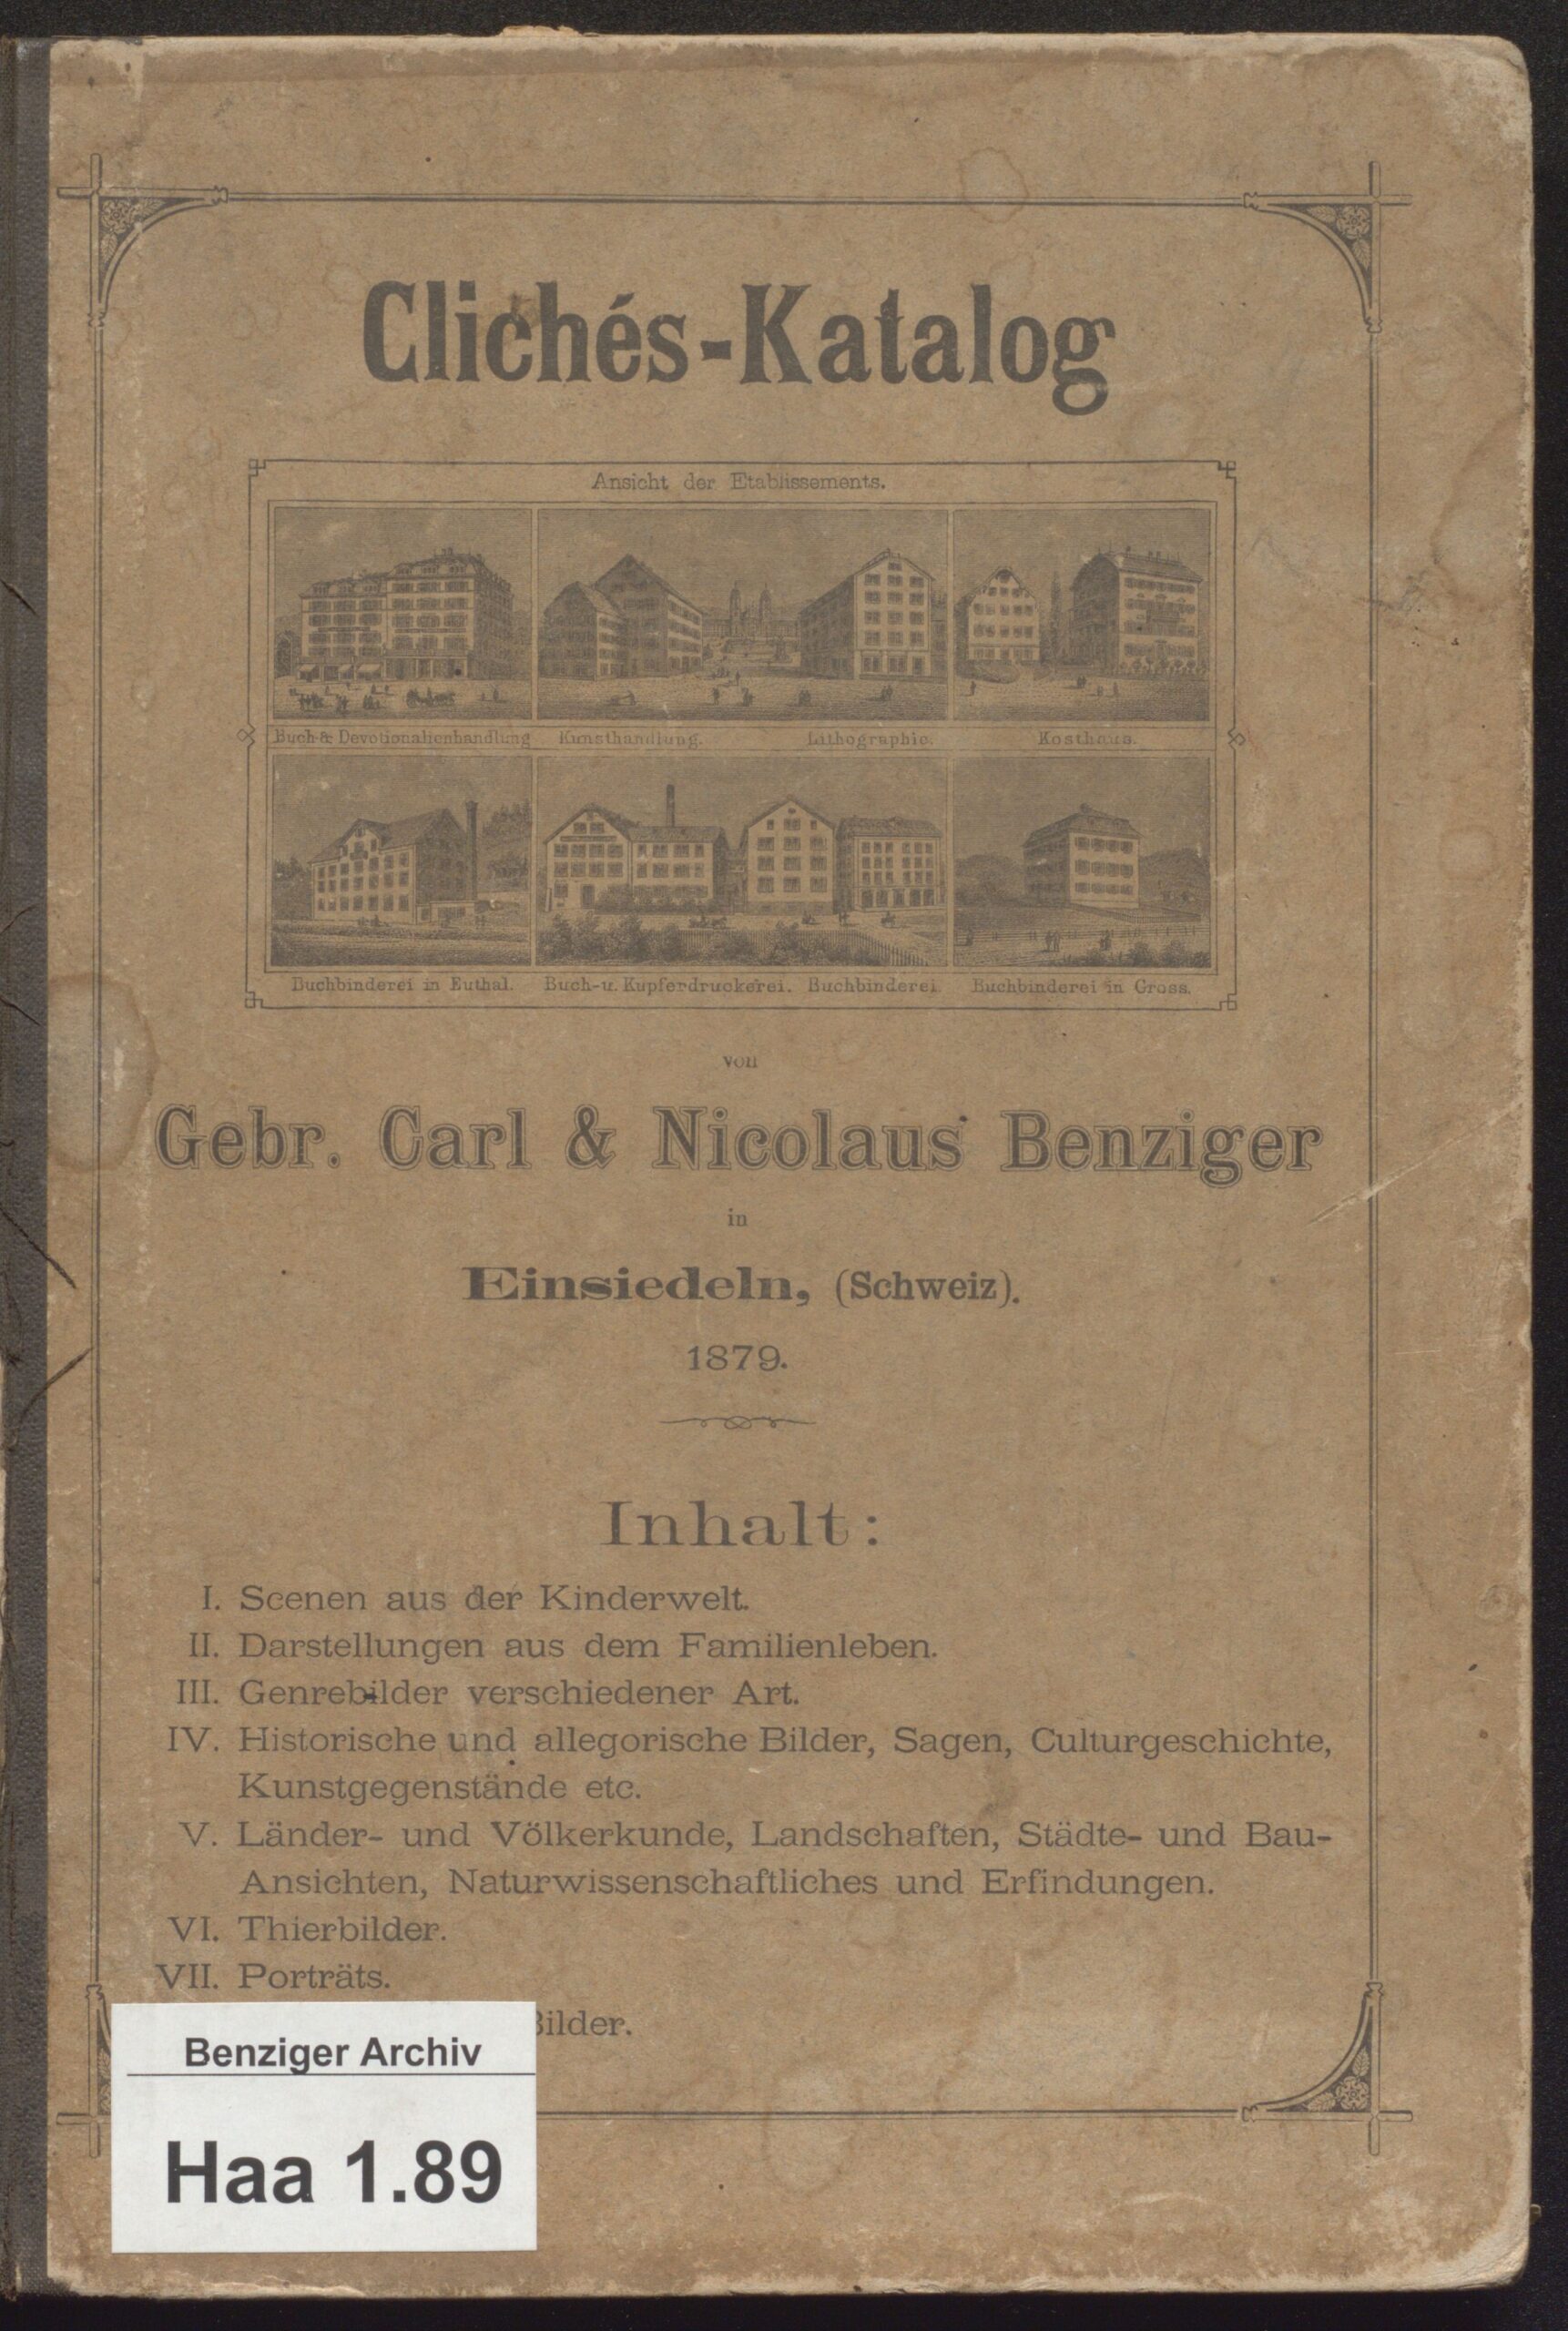 Titelbild des «Clichés-Katalog» aus dem Jahr 1879